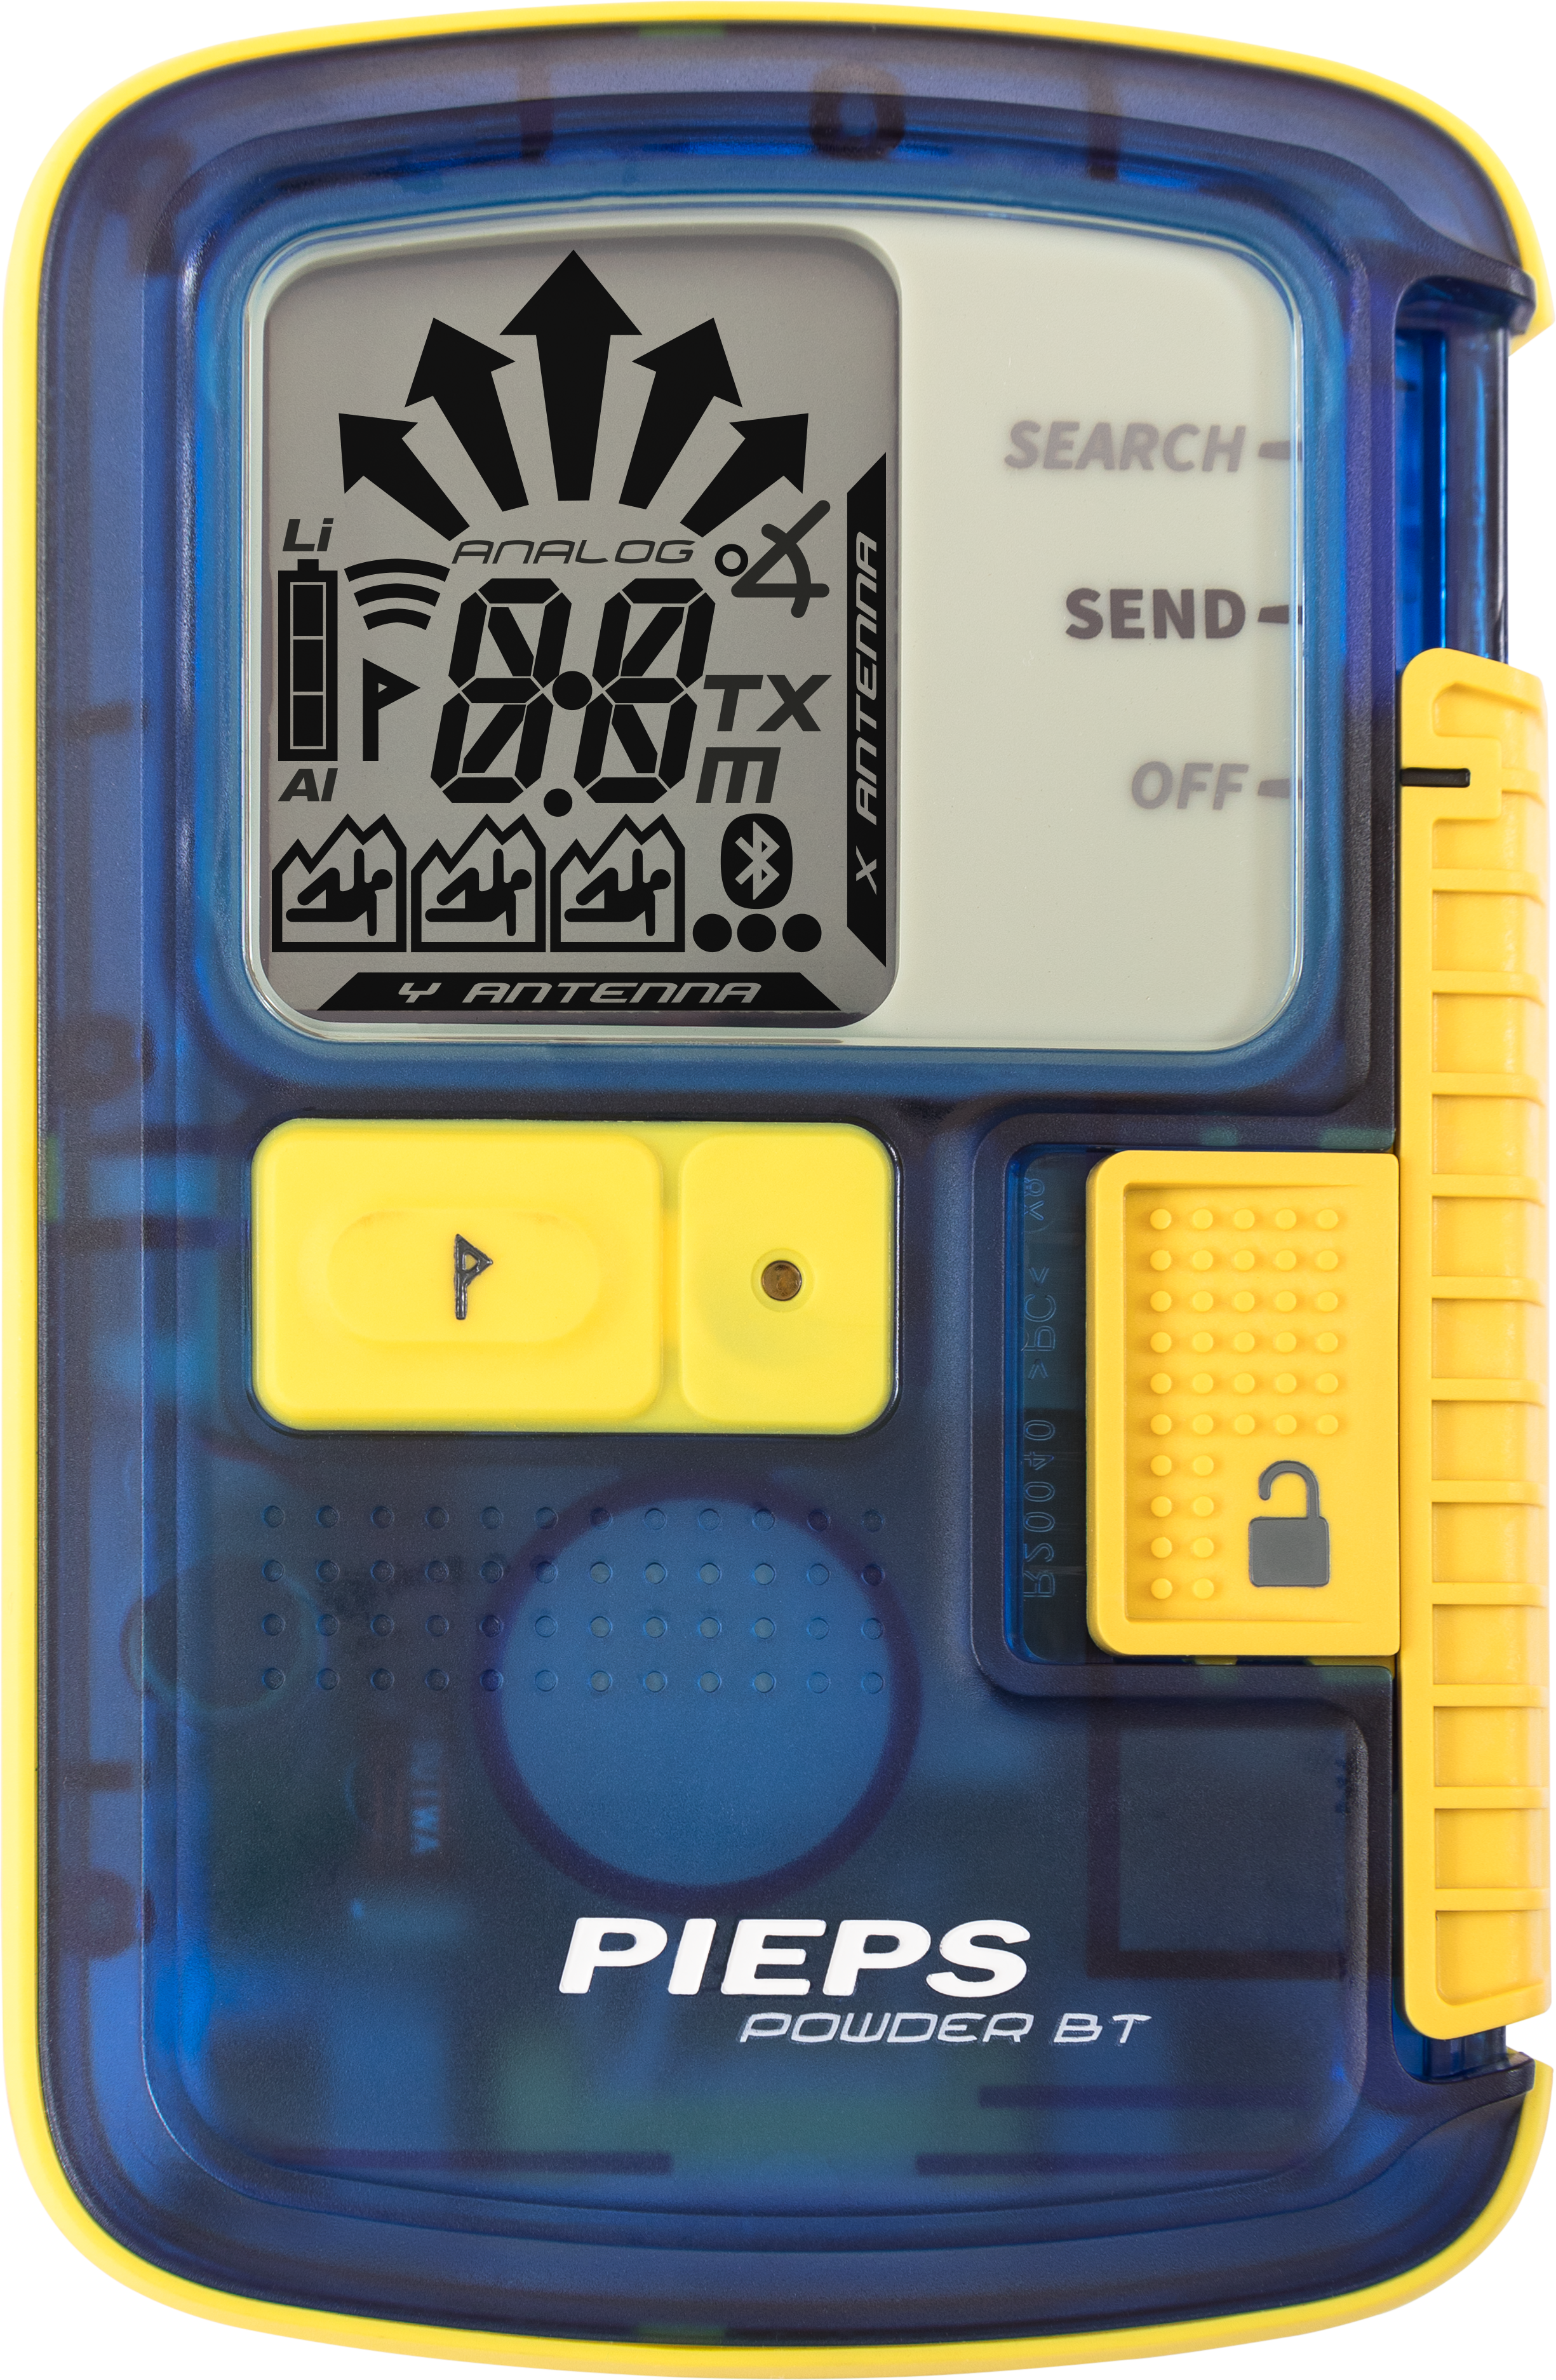 PIEPS Powder BT Translucent Blue/Yellow